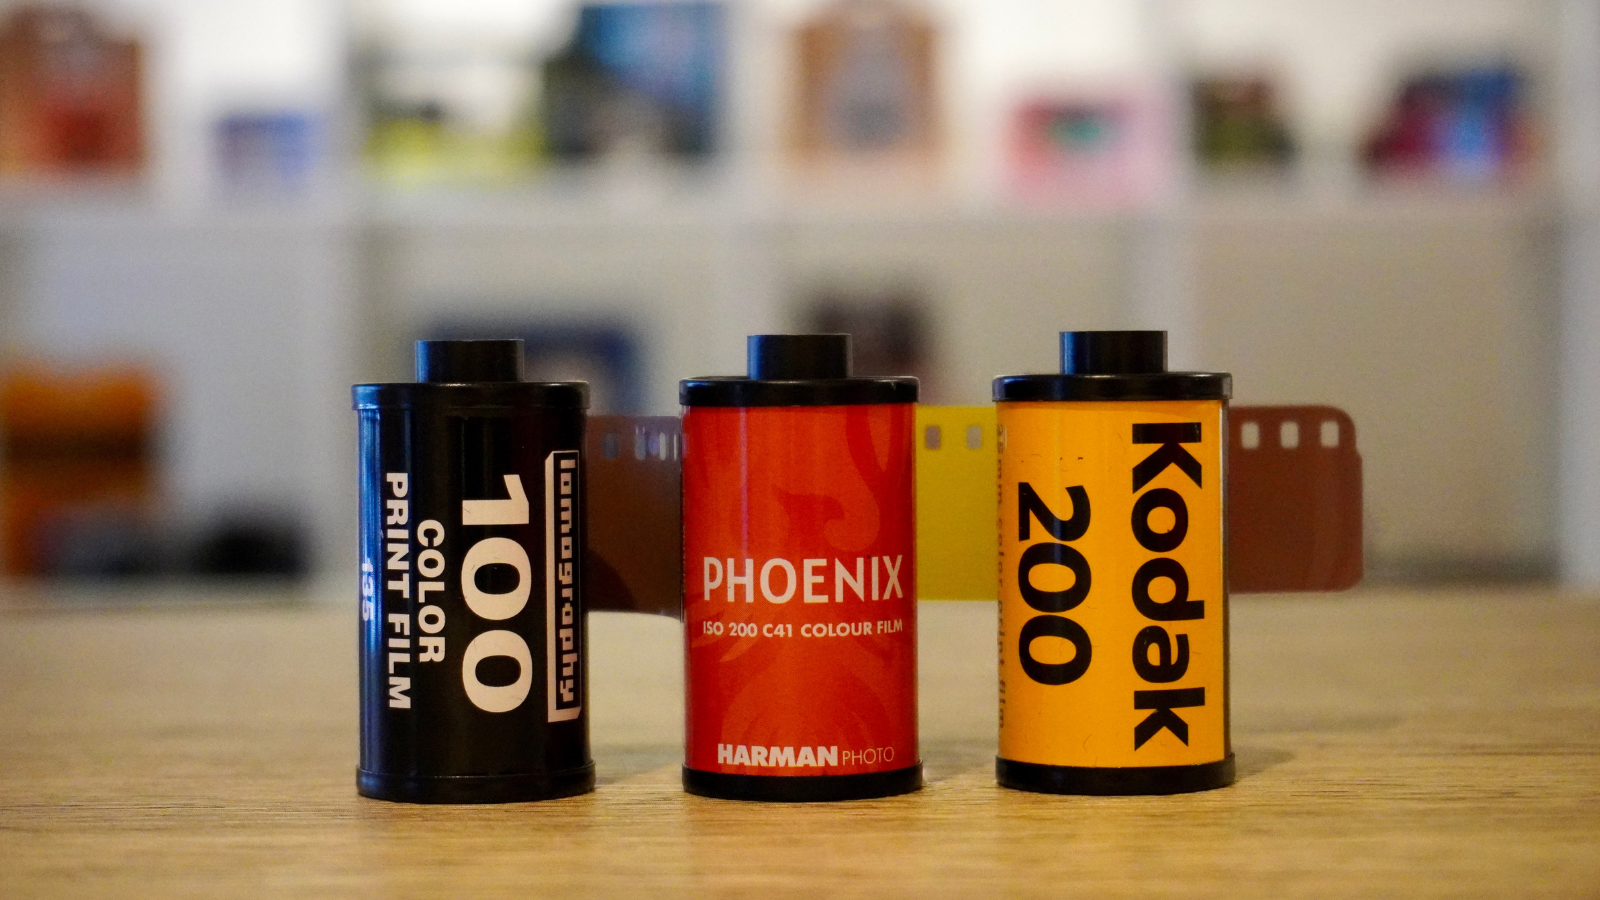 Harman Phoenix Vs Kodak Gold Vs Lomography CN100 - What You Can Expect